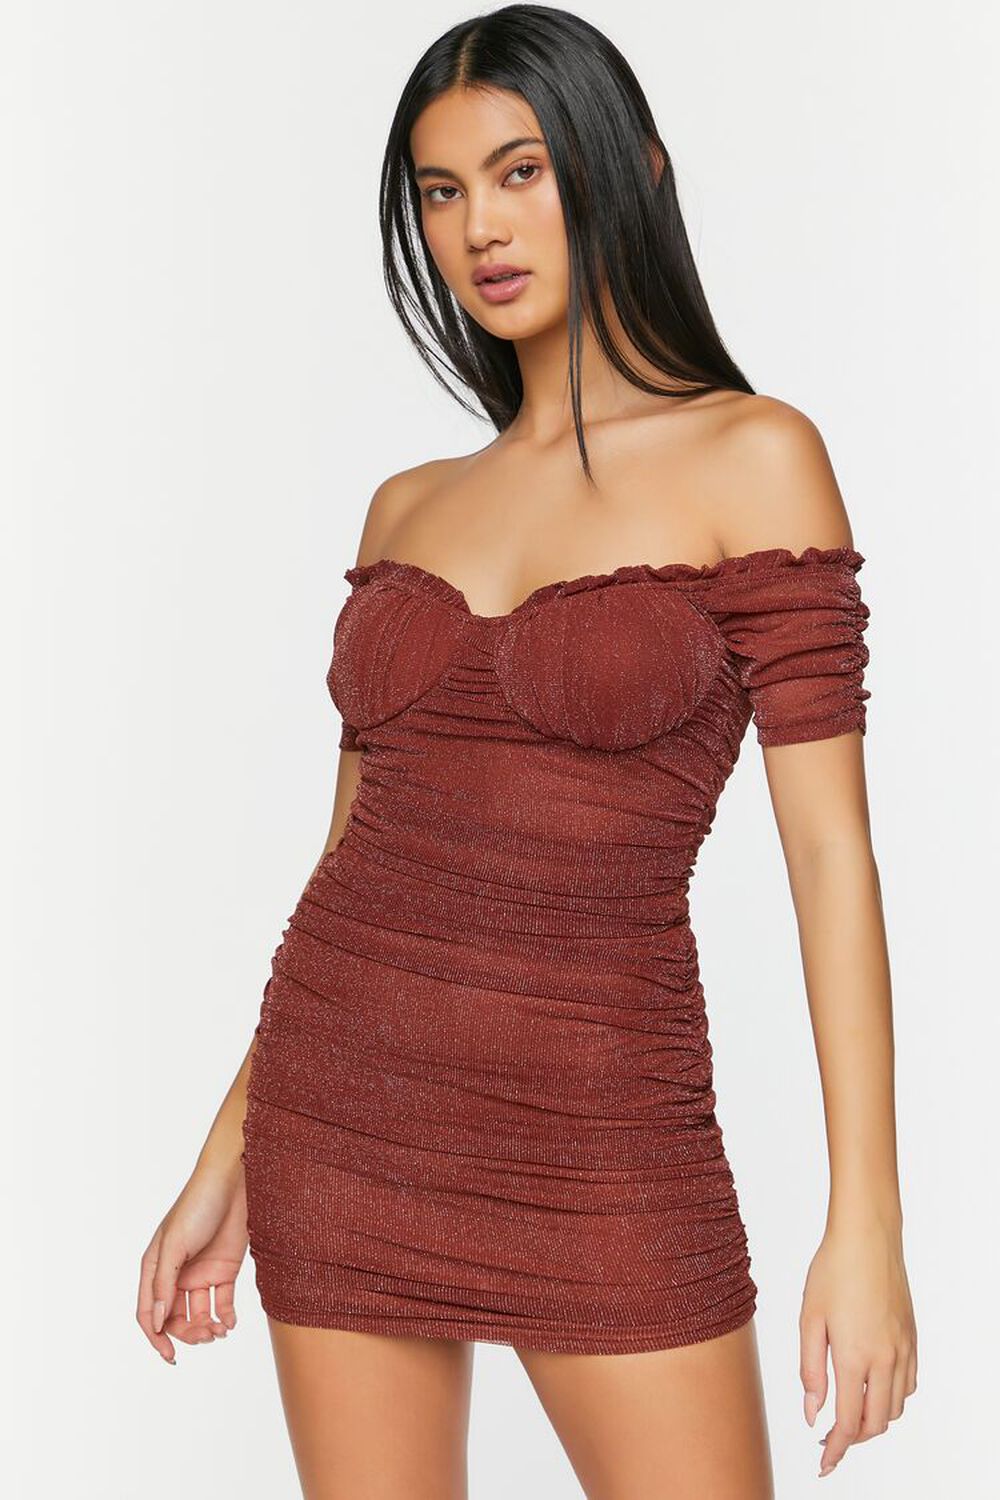 BROWN Glitter Knit Off-the-Shoulder Mini Dress, image 1